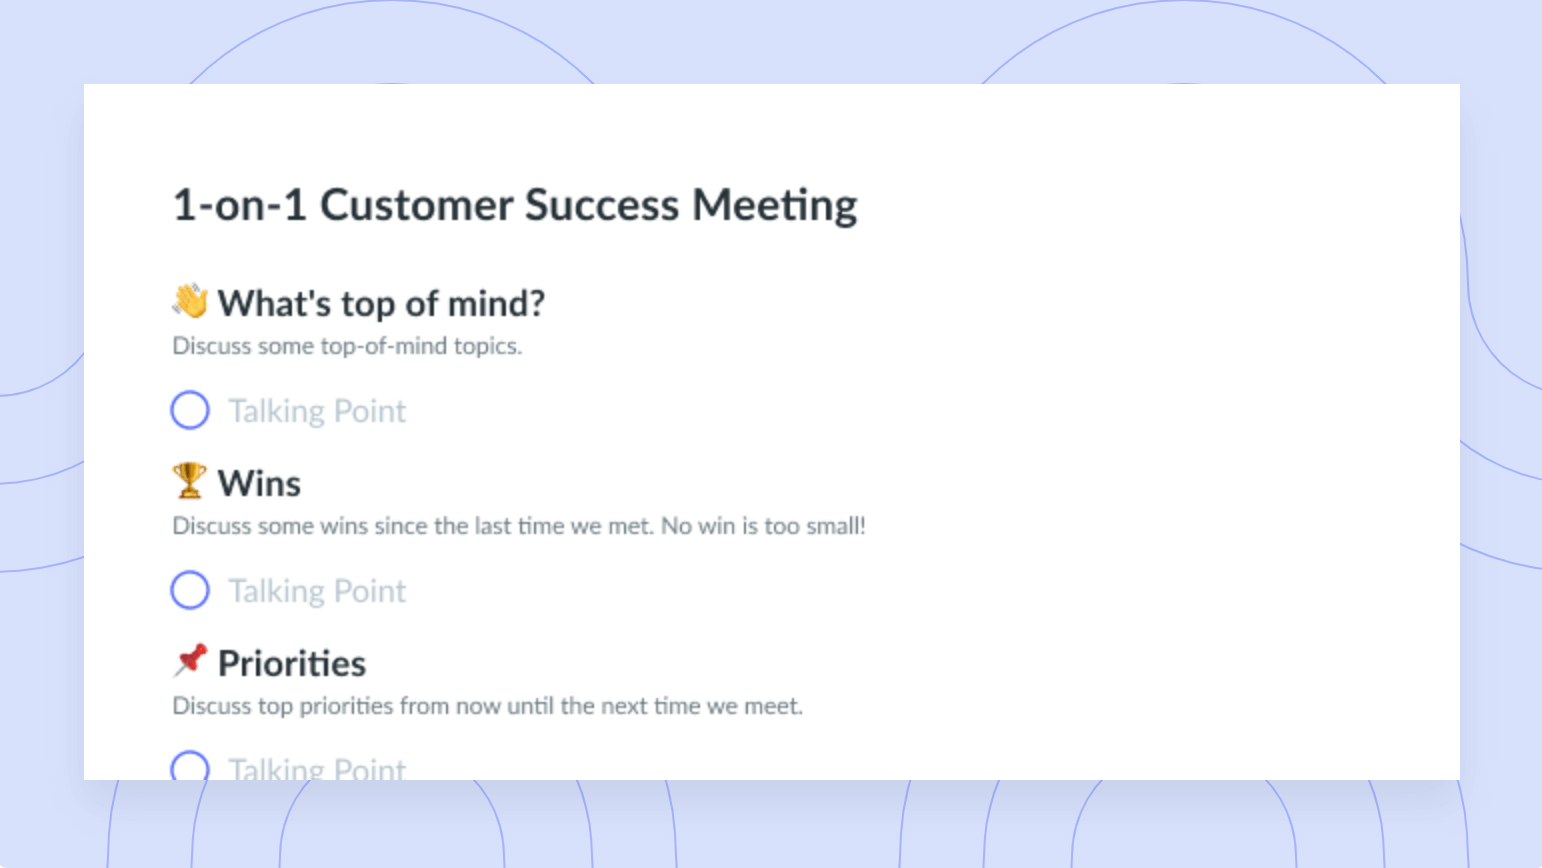 1-on-1 Customer Success Meeting Template